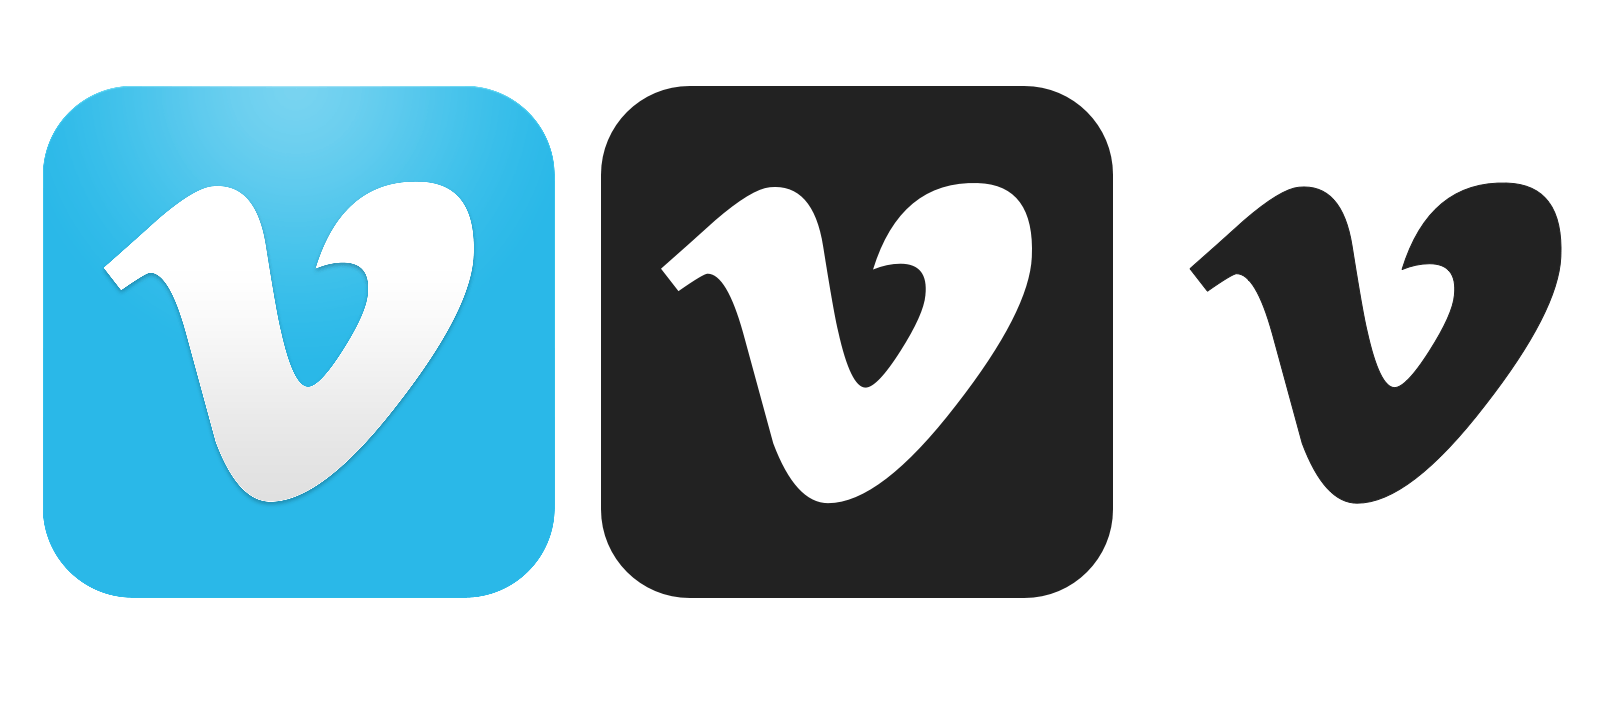 All Vimeo Logos.